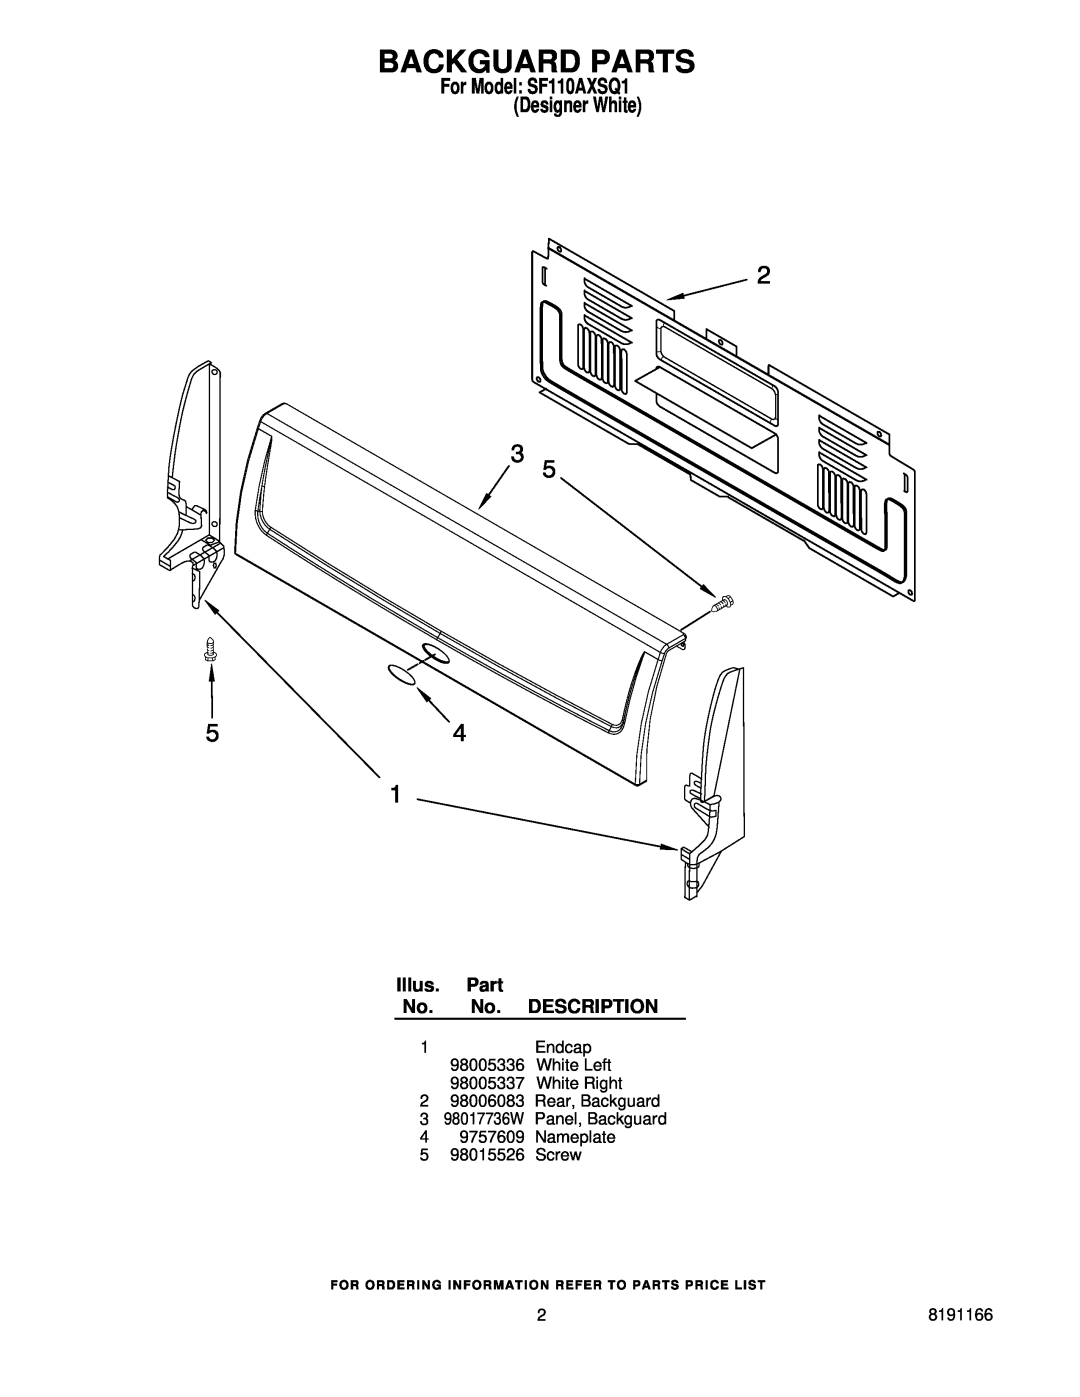 Whirlpool manual Backguard Parts, For Model SF110AXSQ1 Designer White 